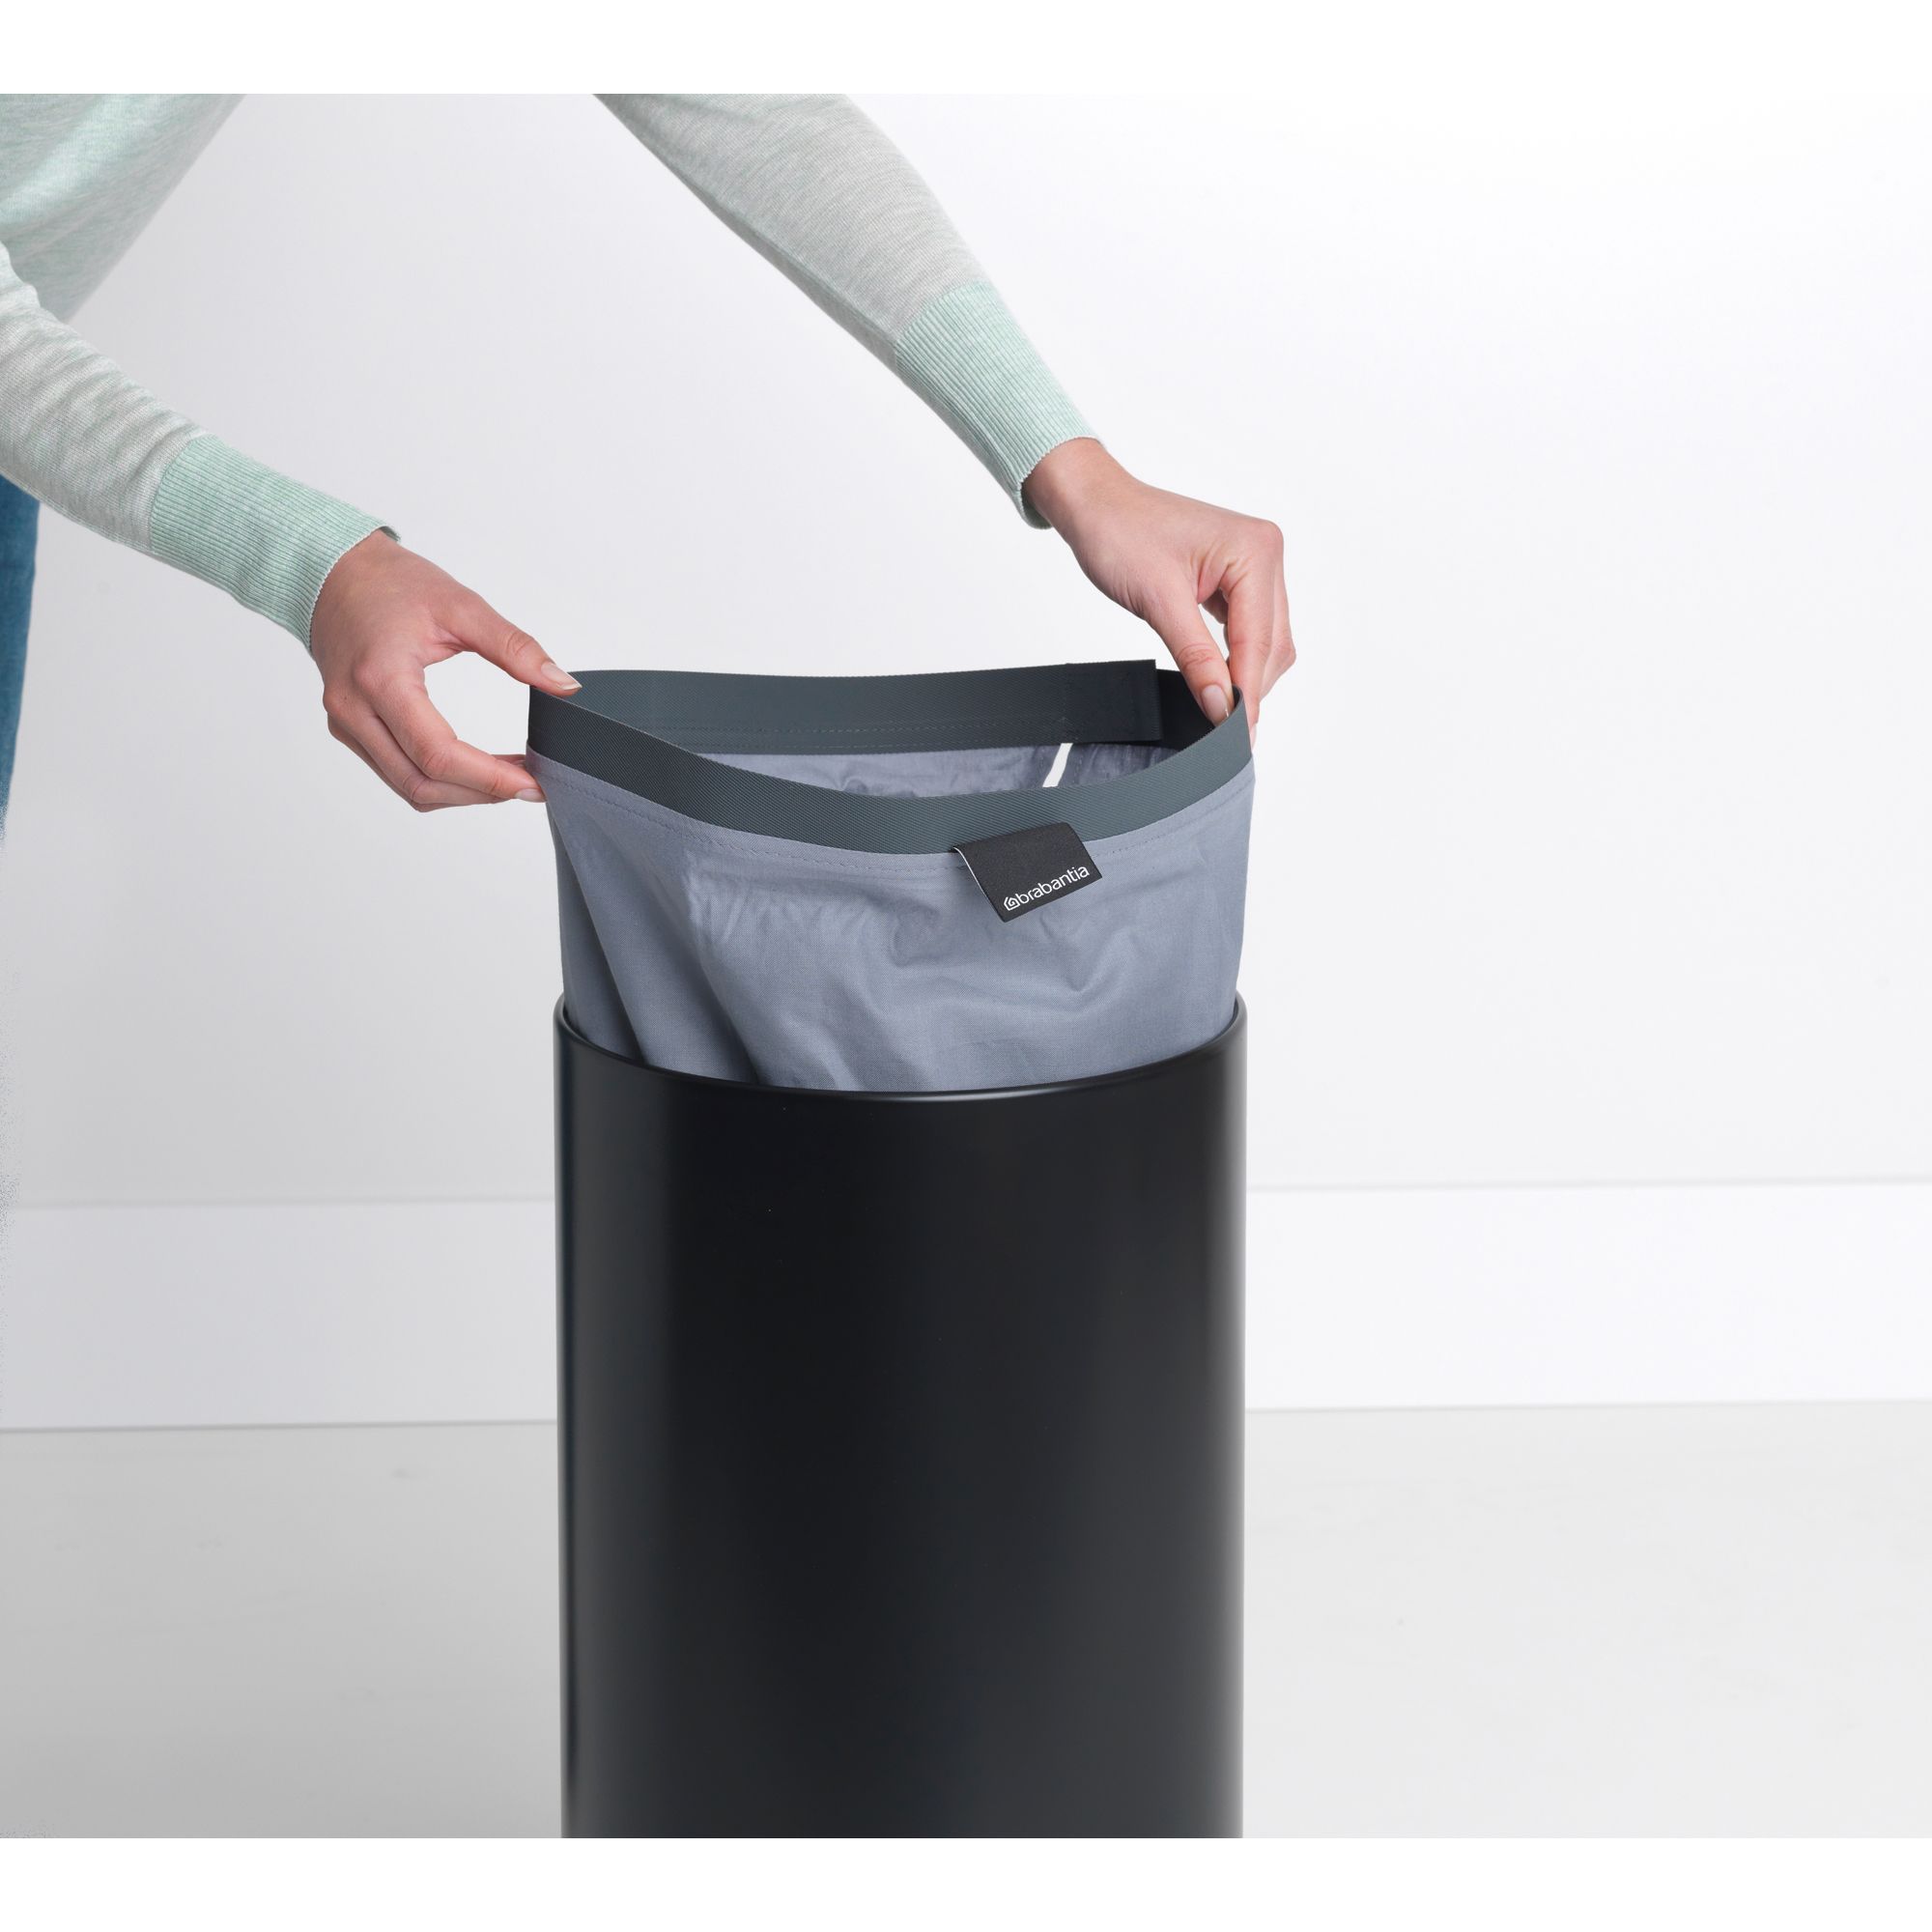 Brabantia Black Steel Laundry bin, 35L